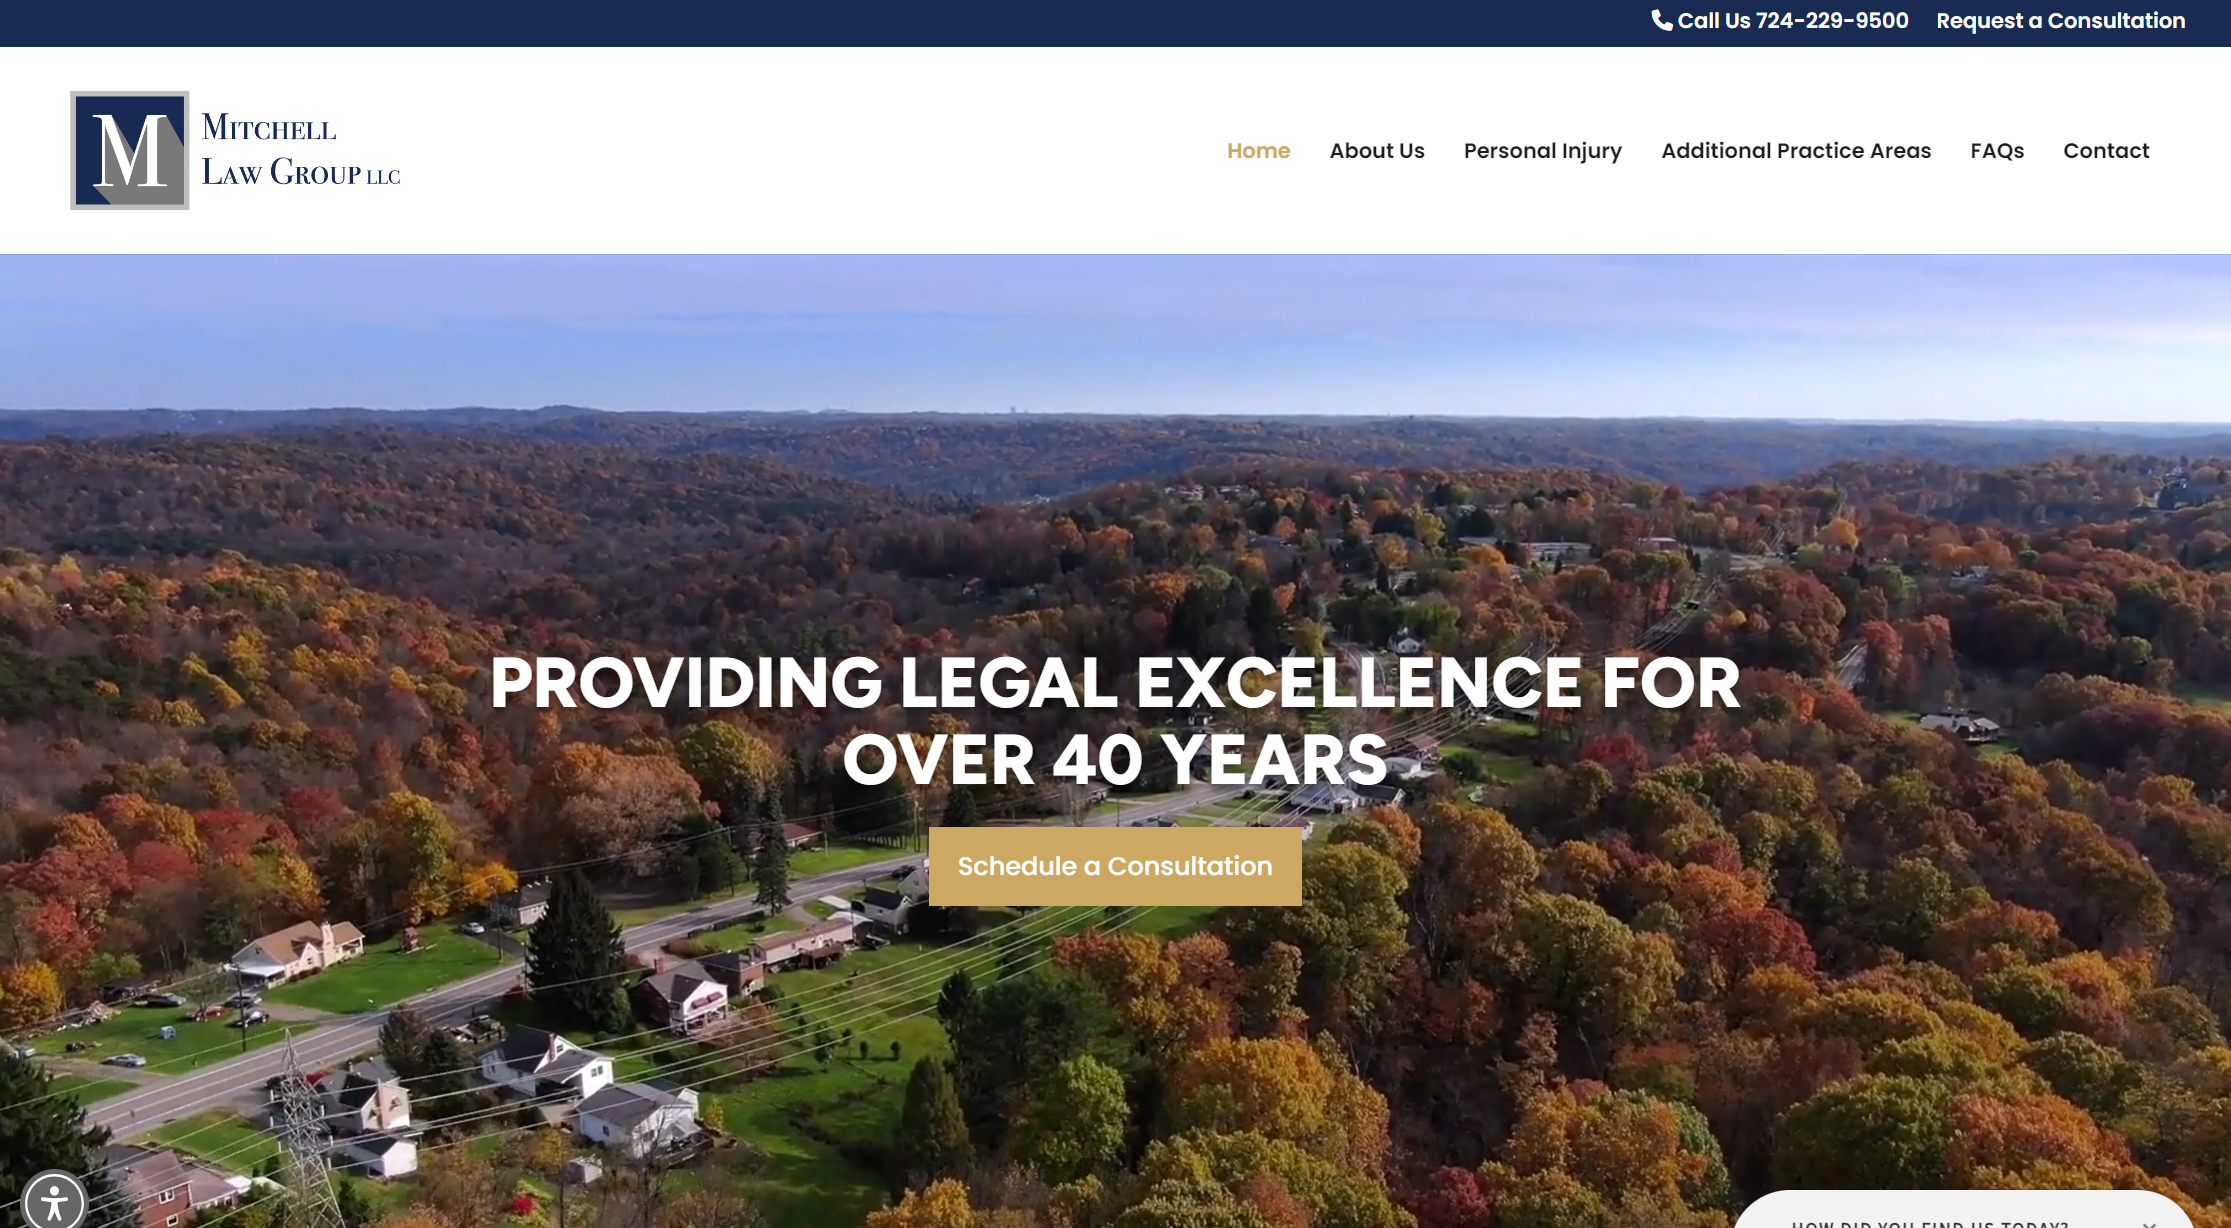 Mitchell Law Group, LLC